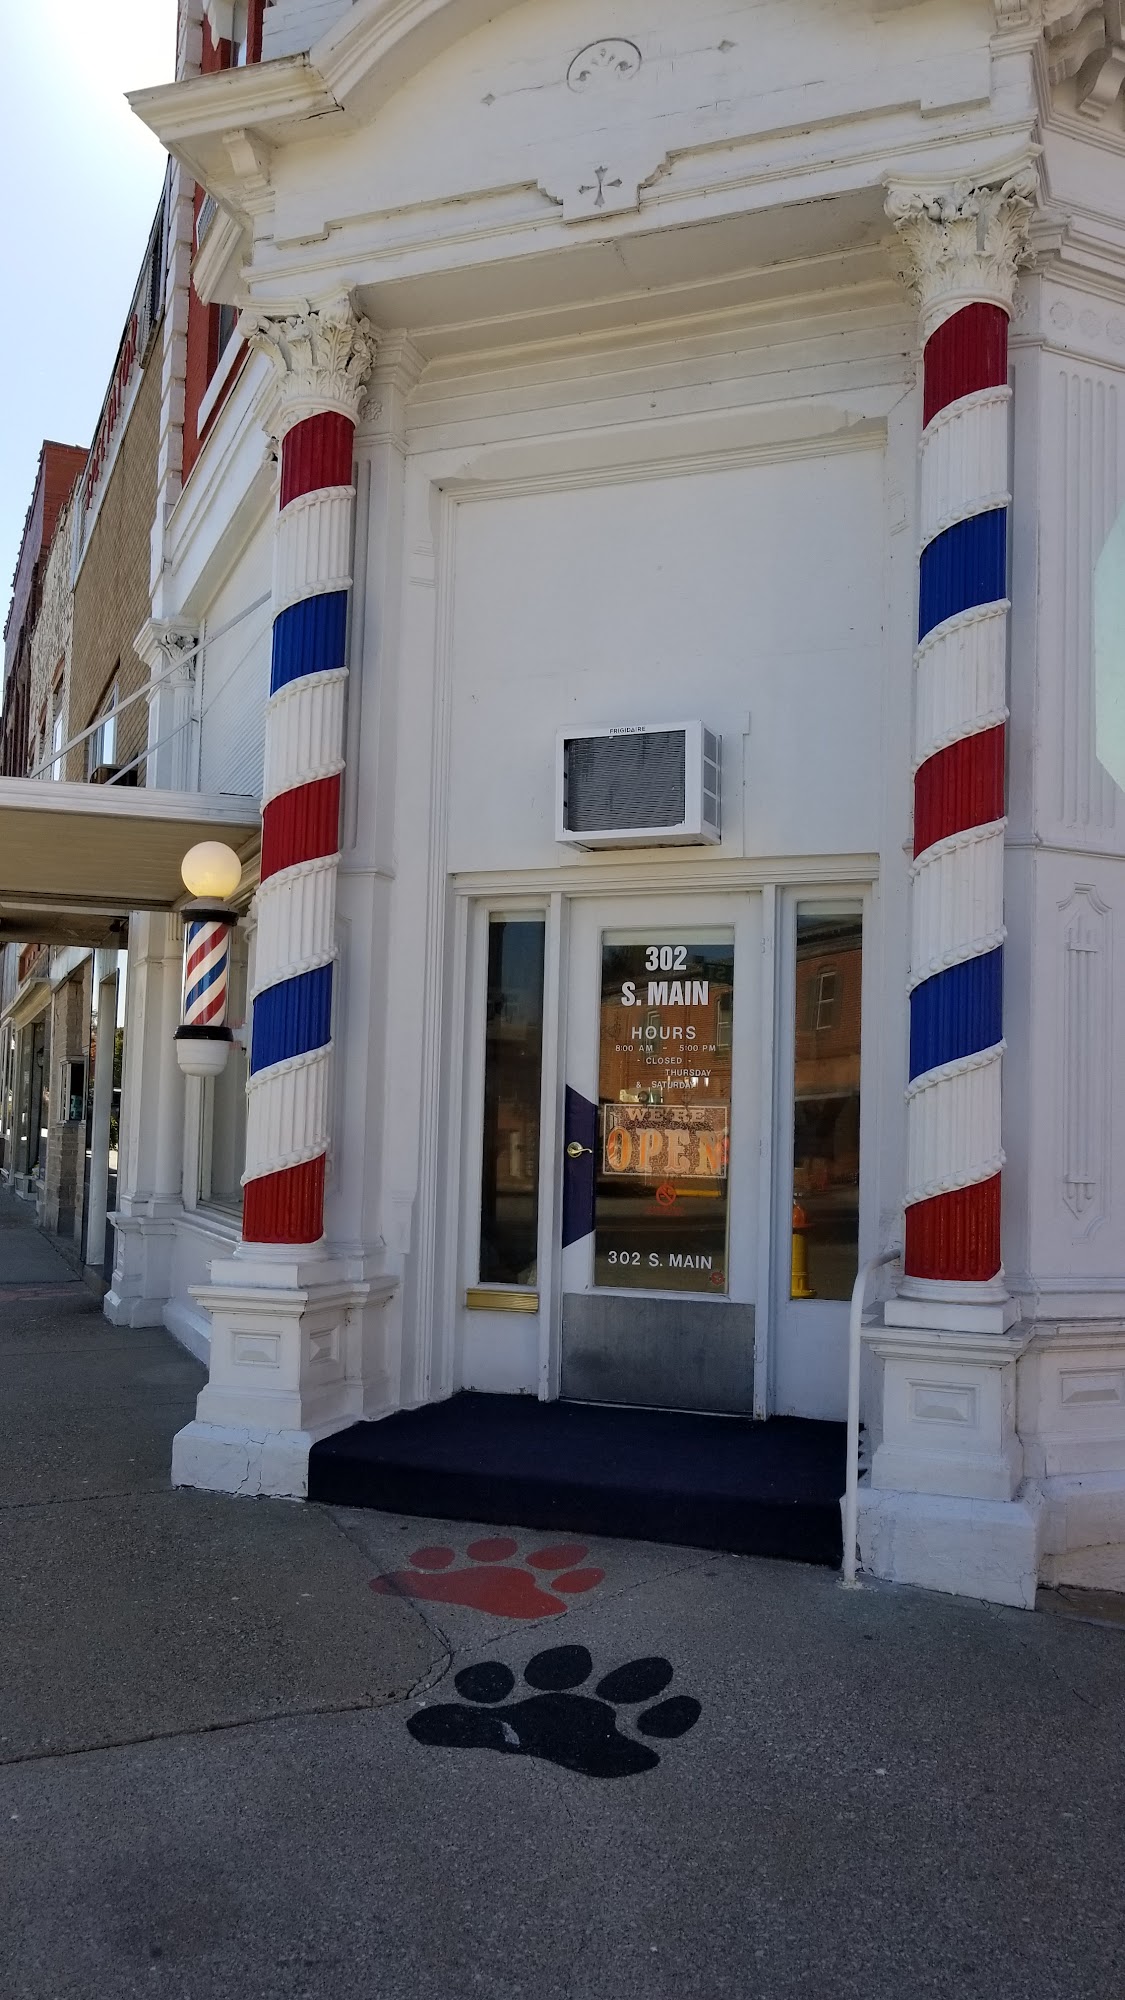 Palmyra Barber Shop 302 S Main St, Palmyra Missouri 63461